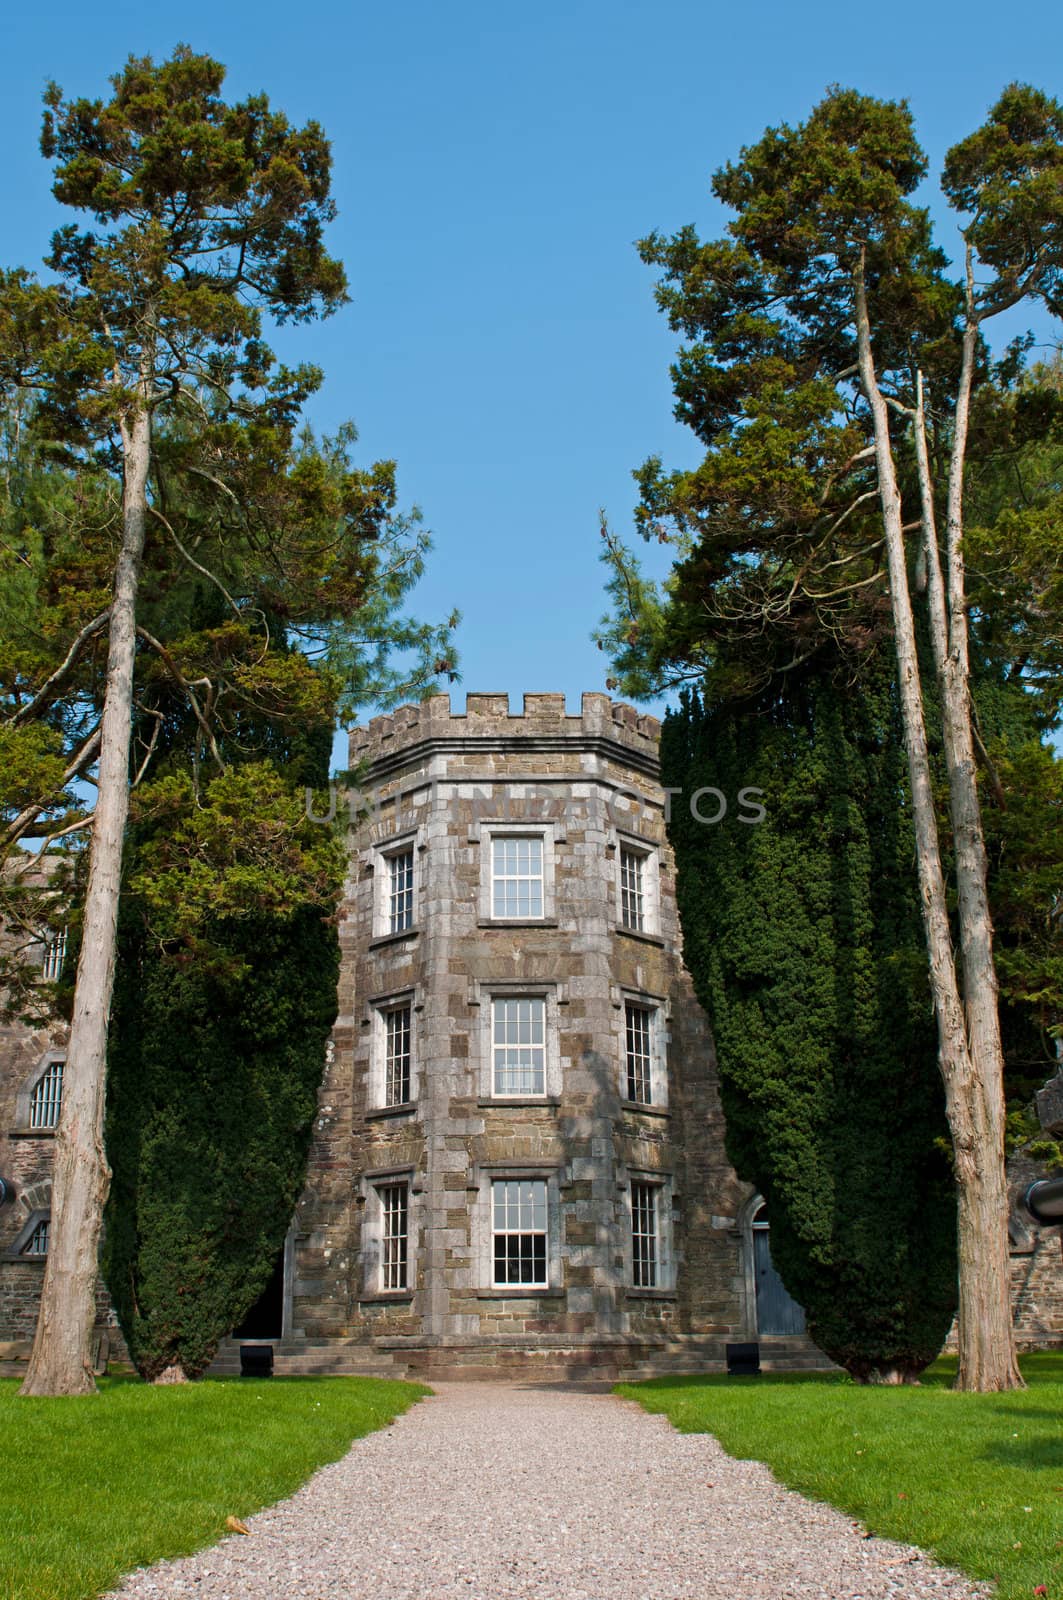 historical Cork City Gaol prison in Cork, Ireland (stunning garden trees and blue sky)